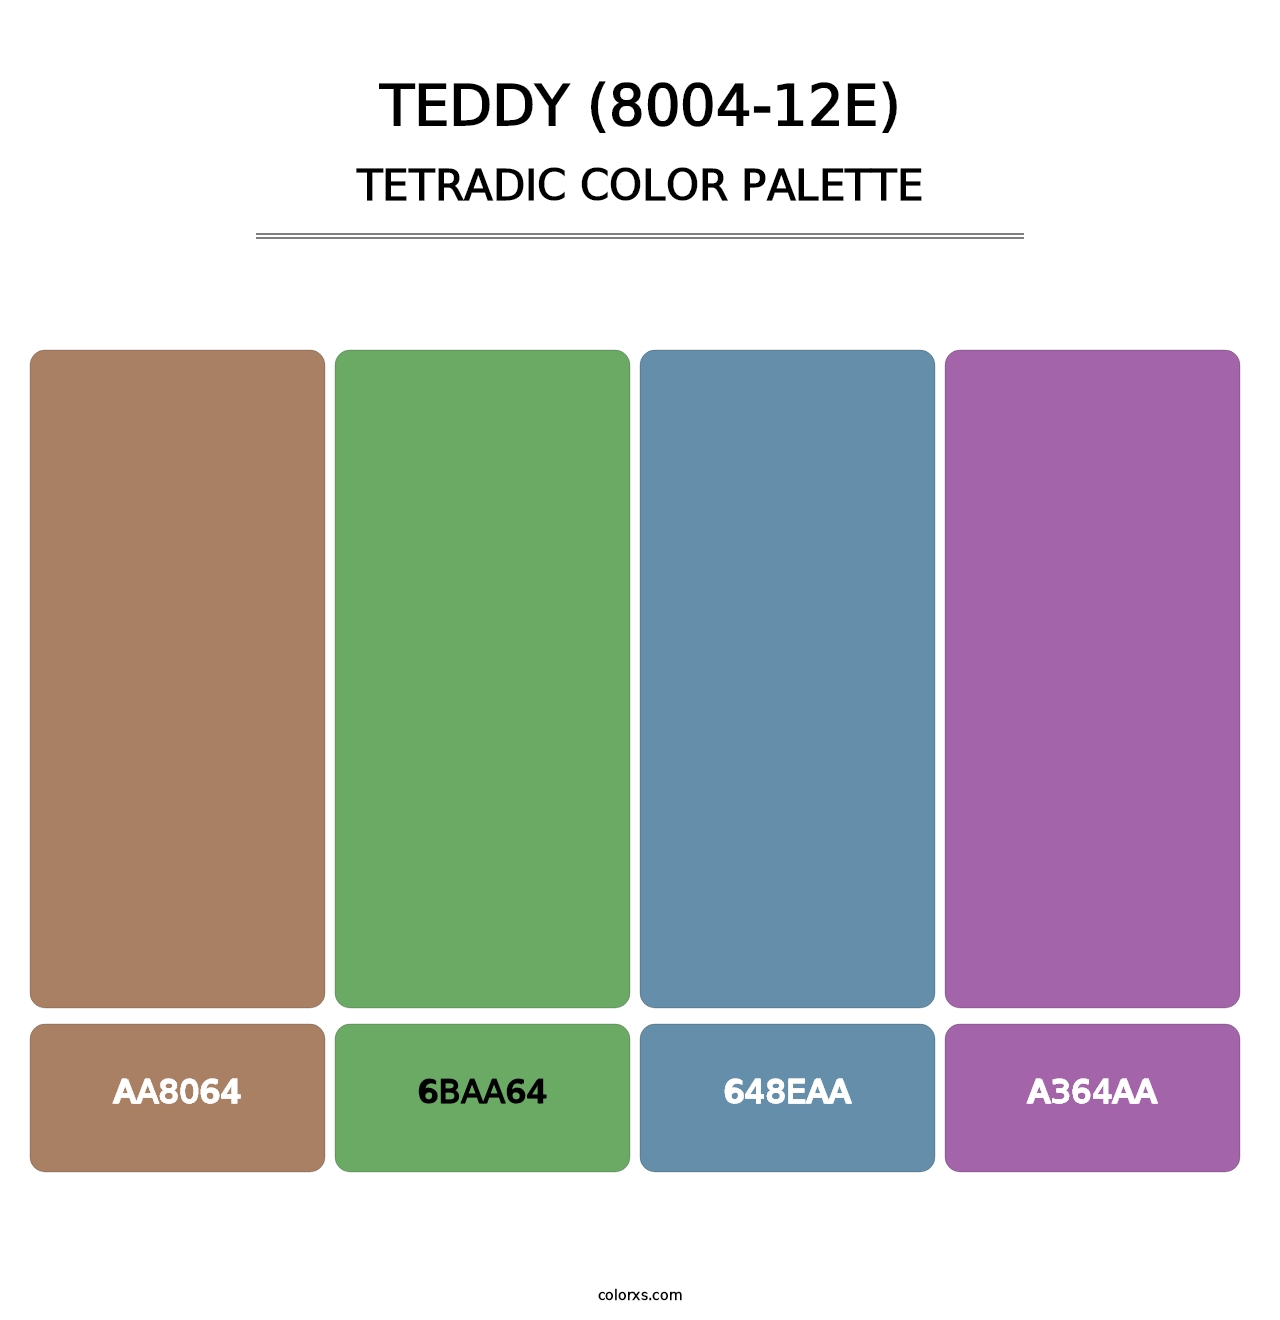 Teddy (8004-12E) - Tetradic Color Palette